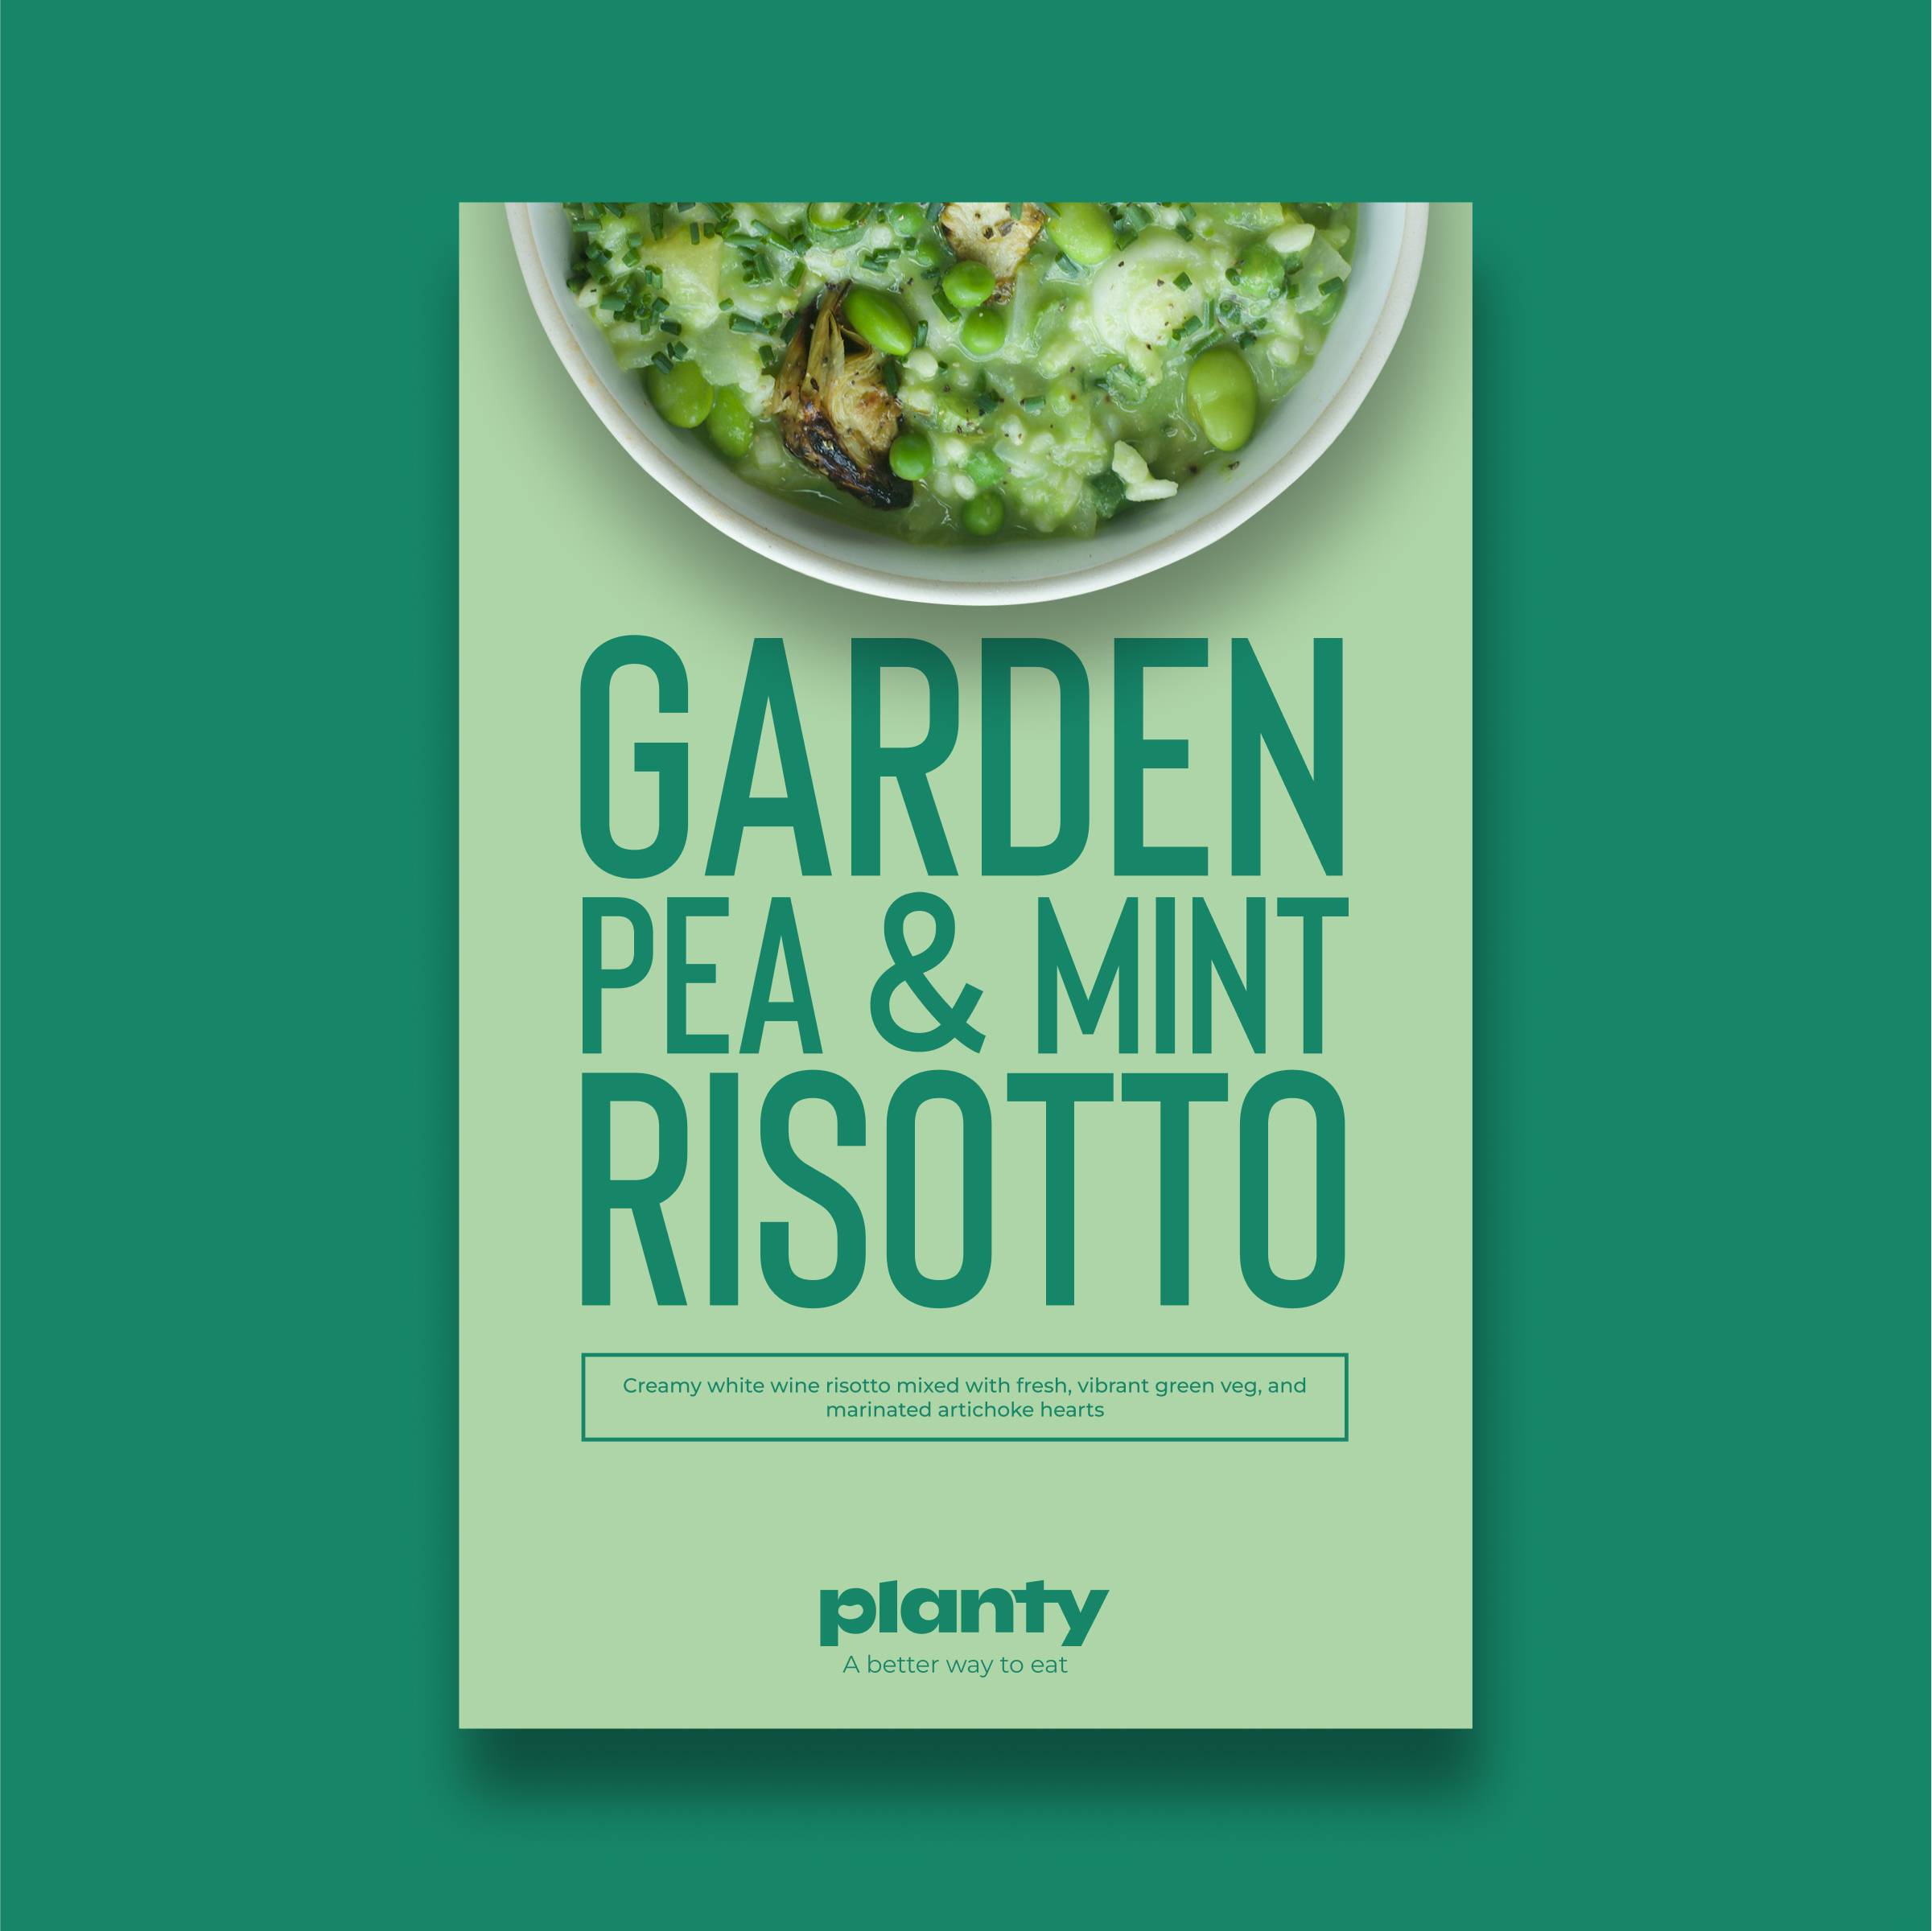 Garden Pea & Mint Risotto image 2